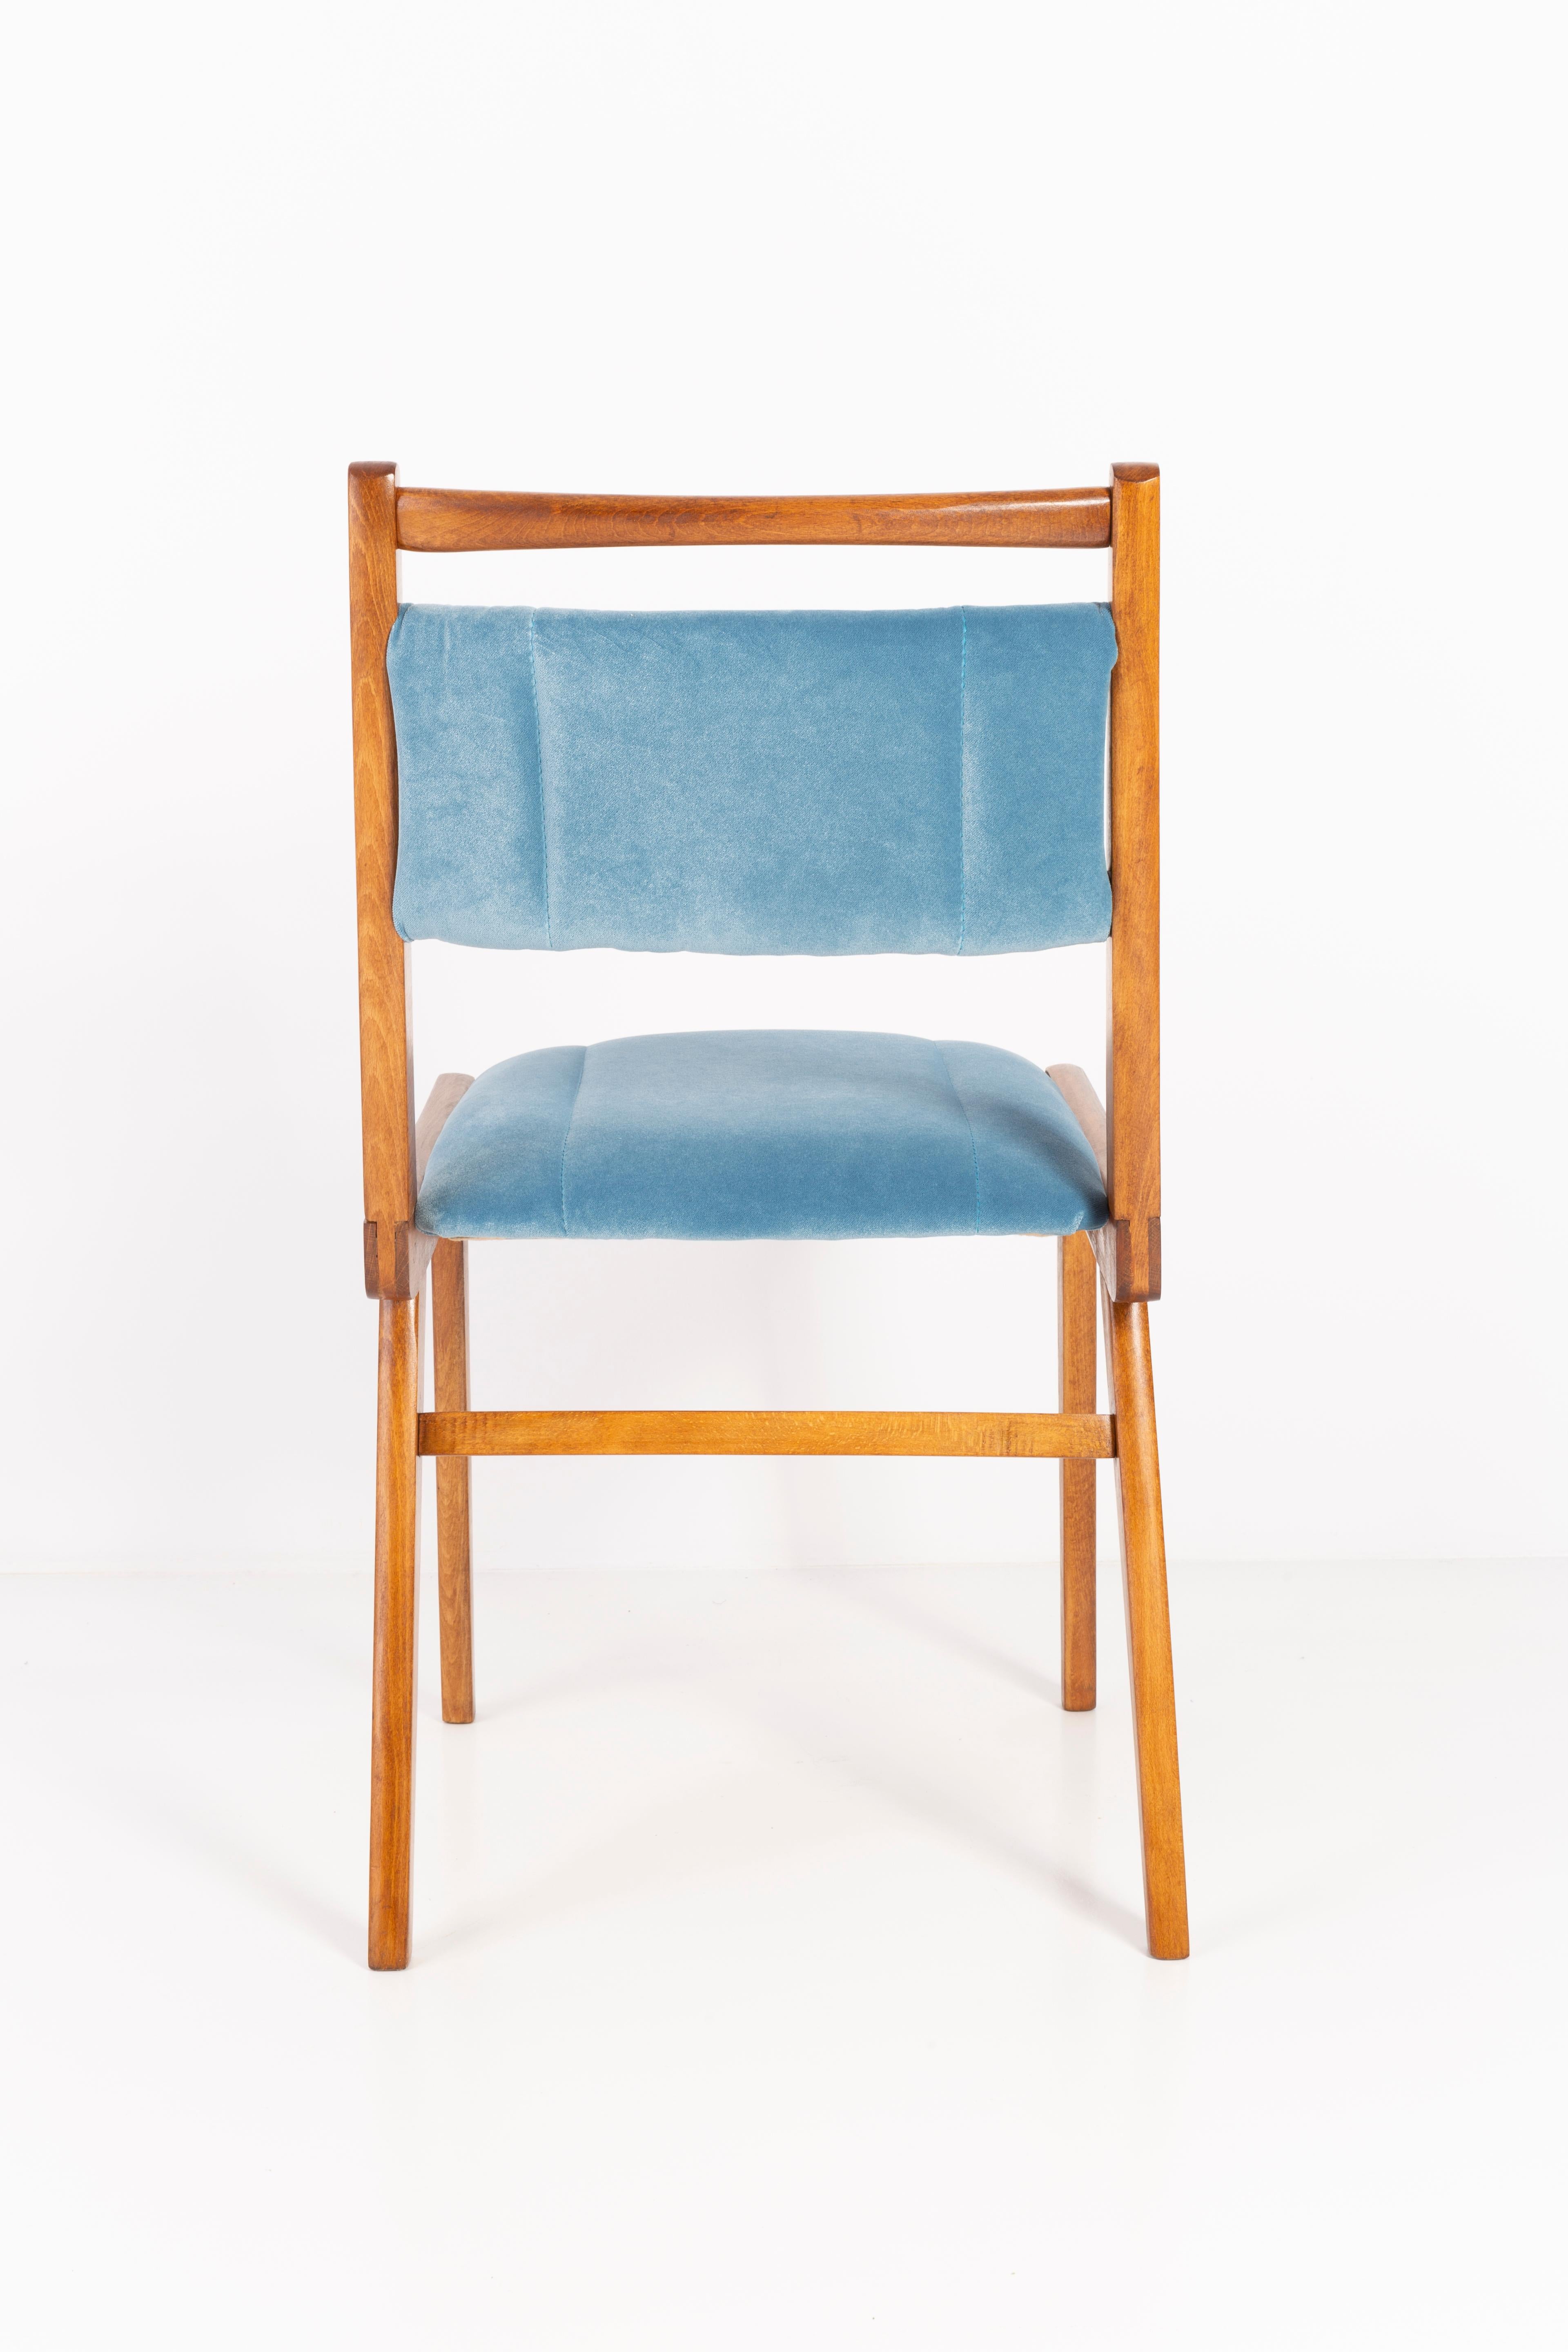 Six 20th Century Blue Velvet Chairs, Poland, 1960s For Sale 6